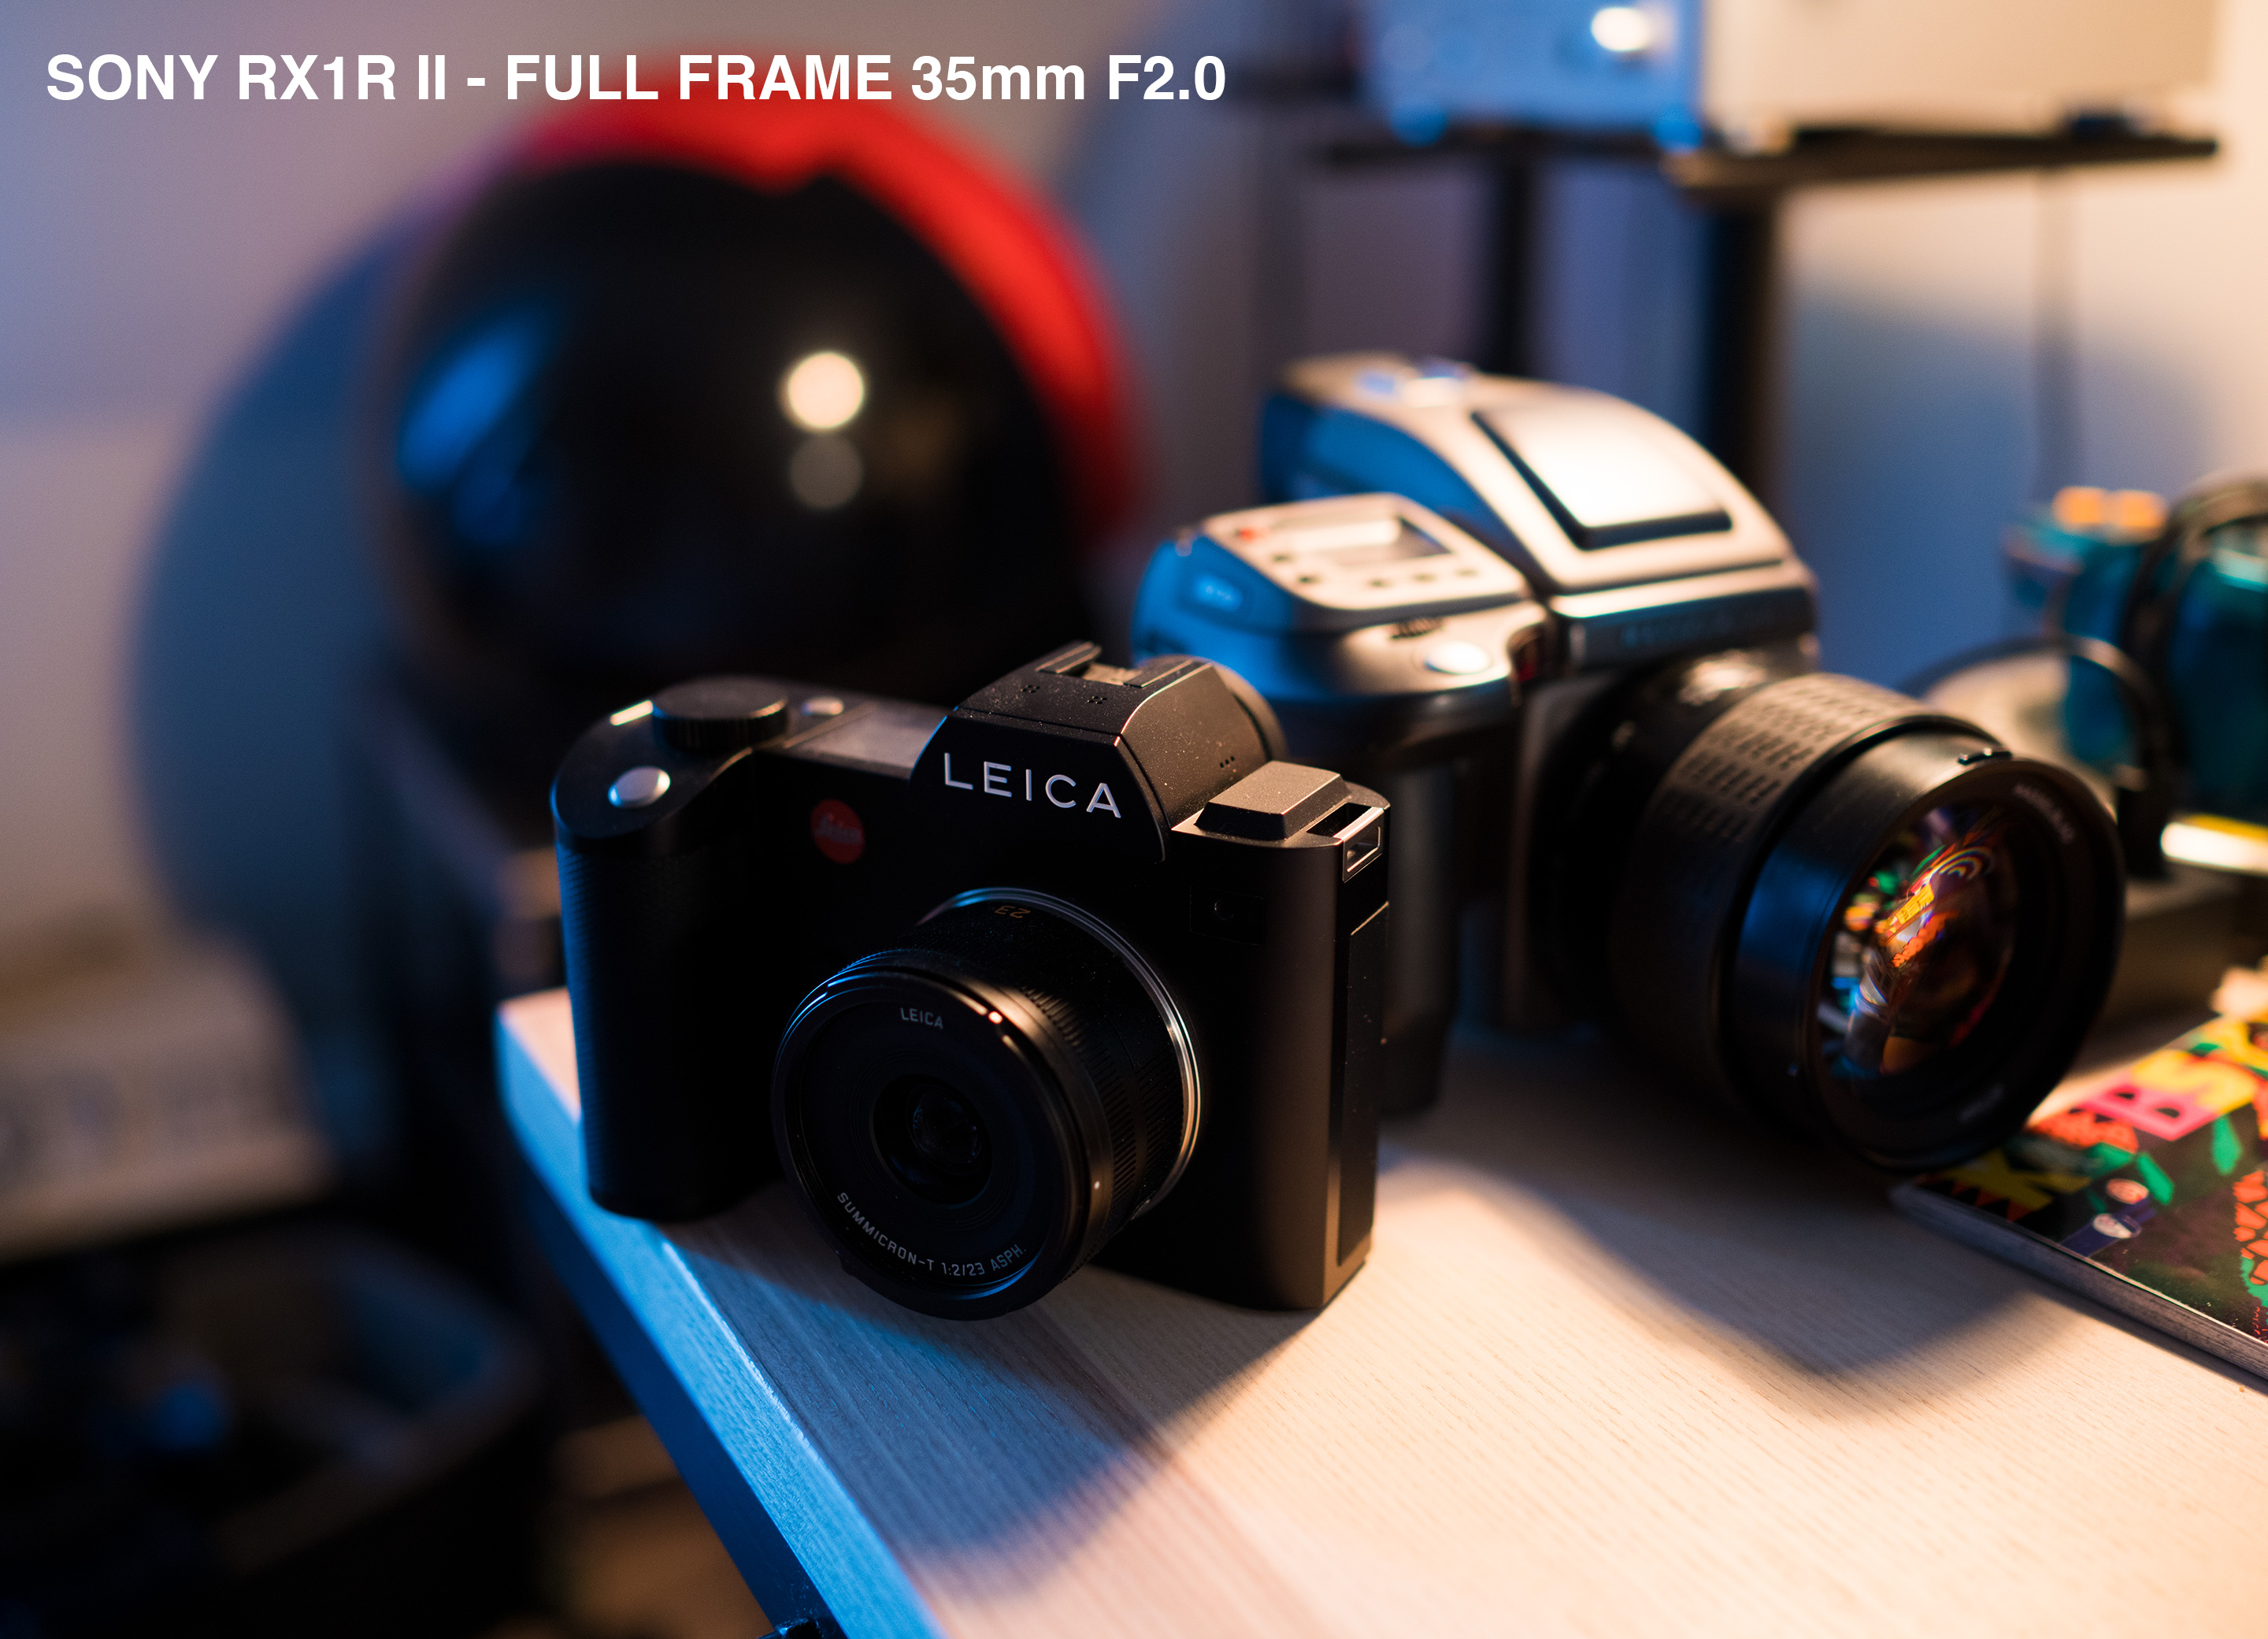 RX1R II - Full frame, 35mm F2.0